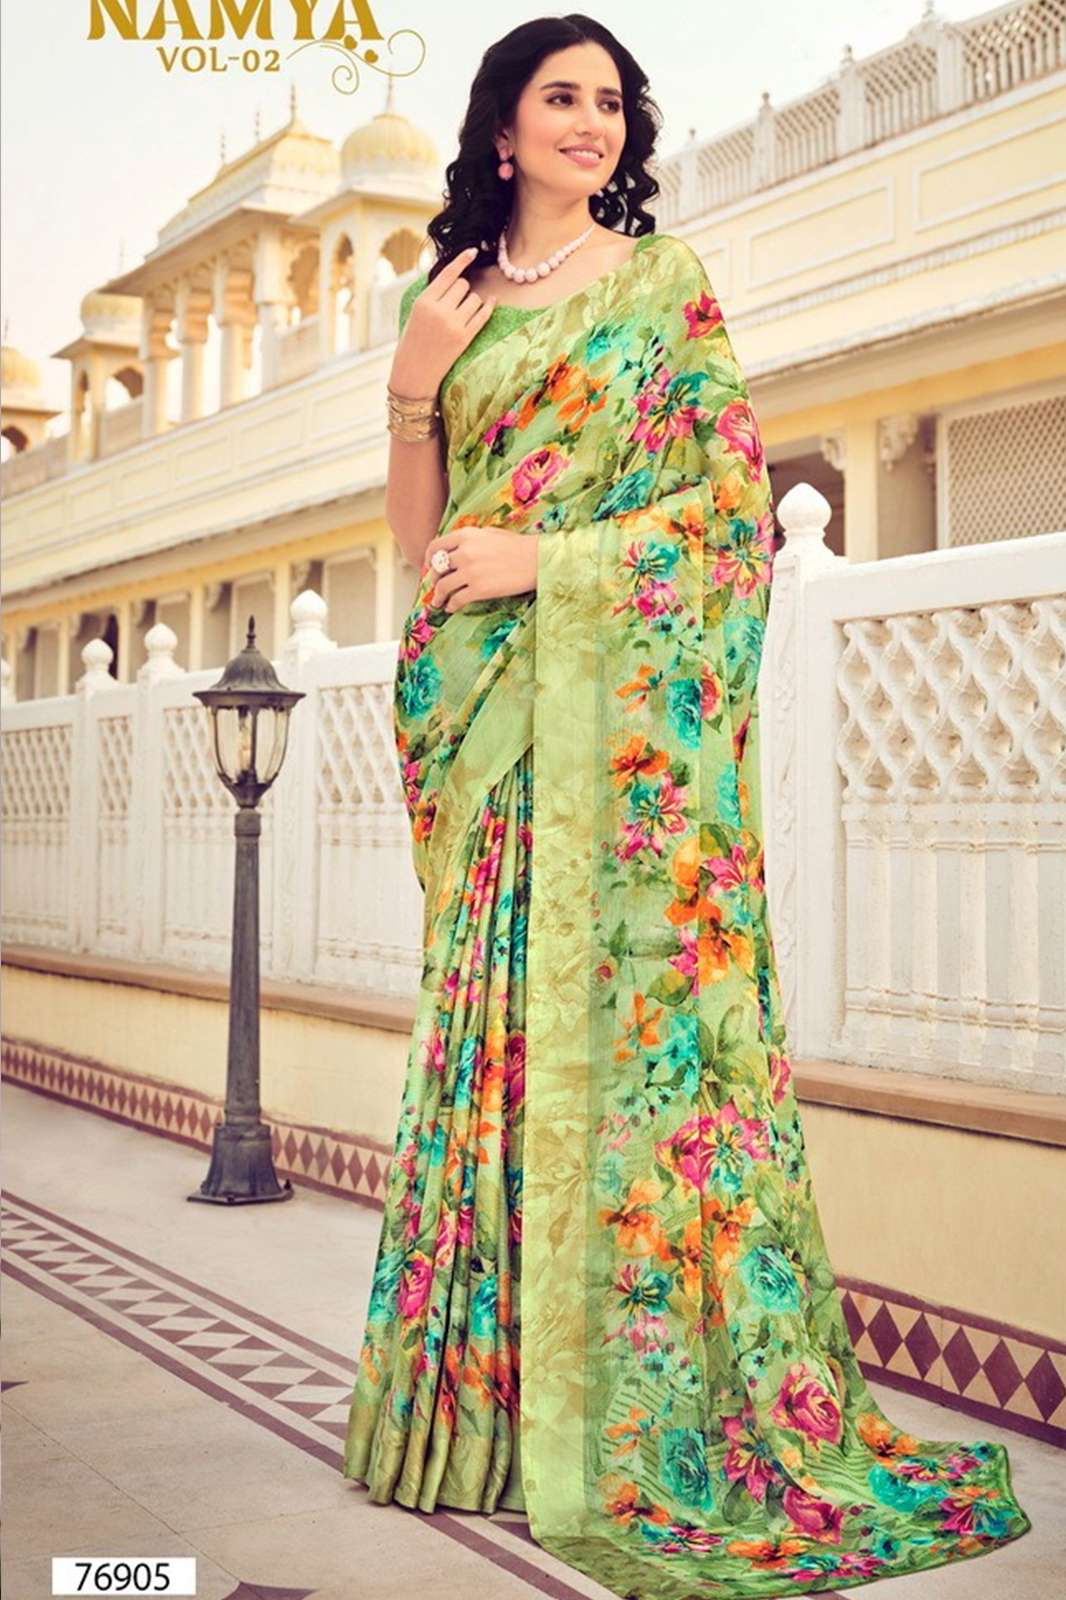 VIPUL 5375 NAMYA VOL-02 Chiffon  Floral  Printed Sarees In Beautiful Multicolors 